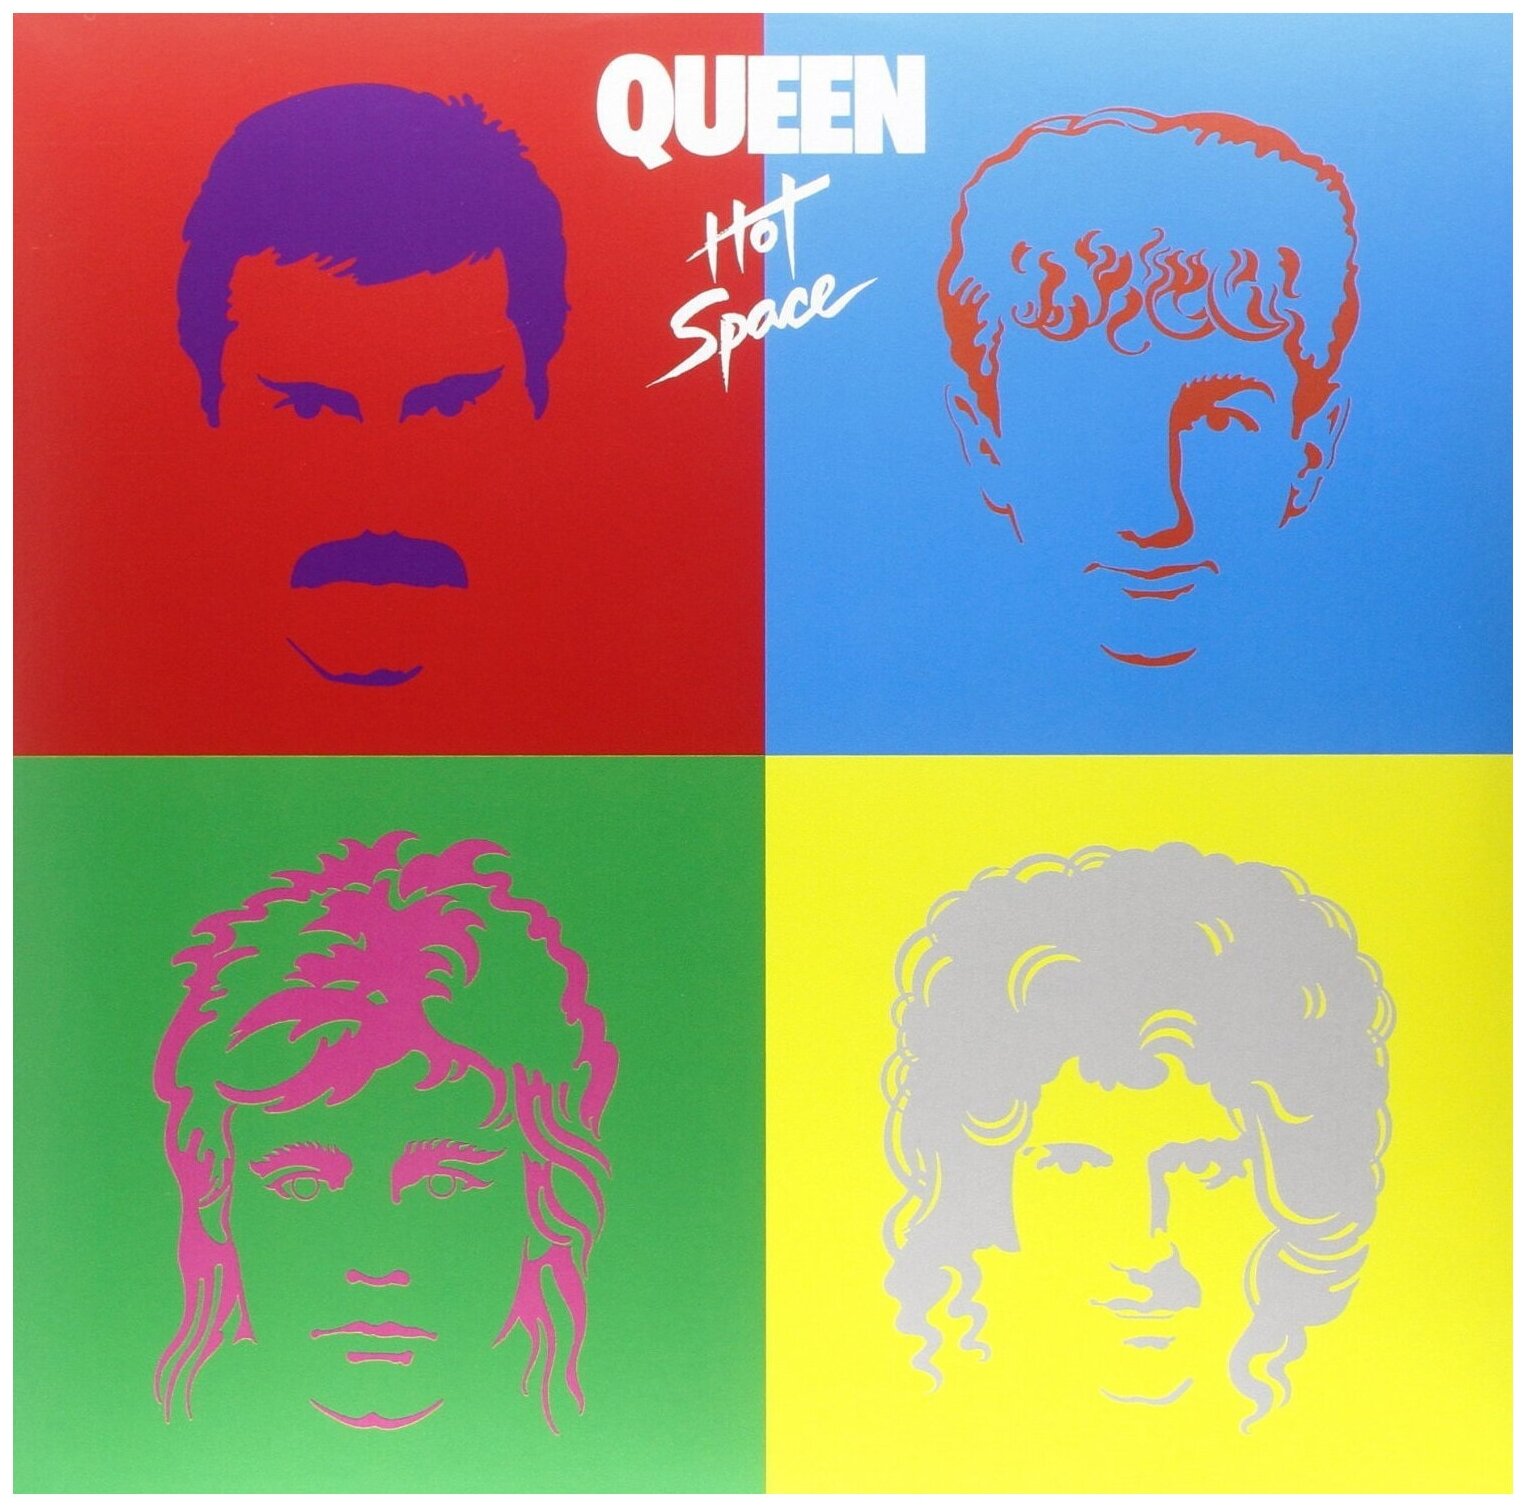 Queen Hot Space Виниловая пластинка Universal Music - фото №1